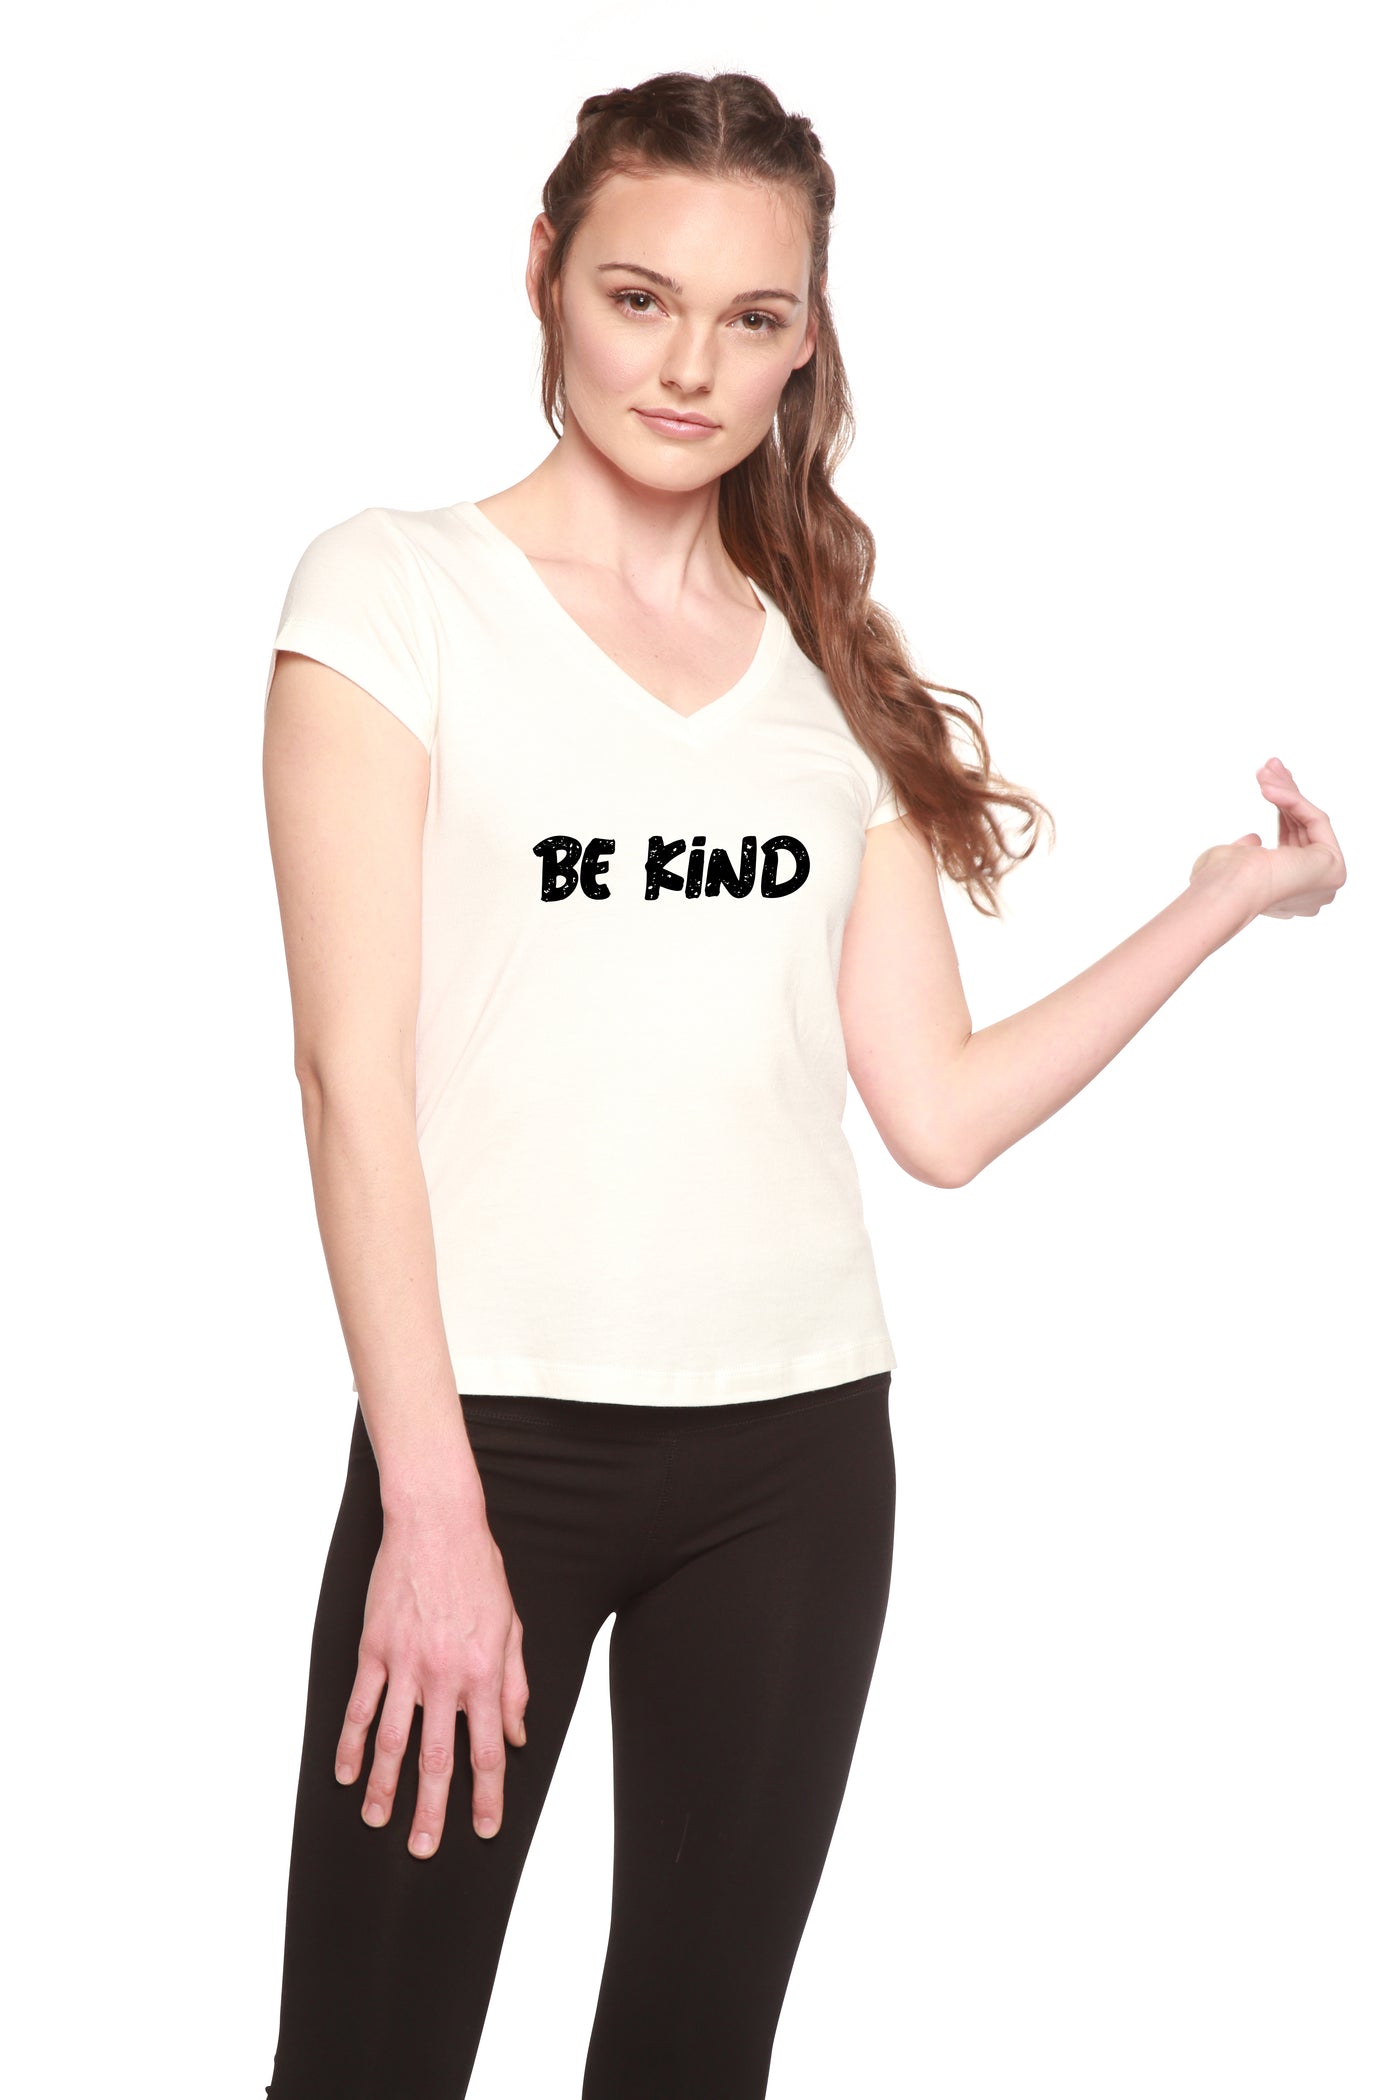 Be Kind Printed Women's Bamboo Viscose/Cotton V-Neck Cap Sleeve T-Shirt - Spun Bamboo